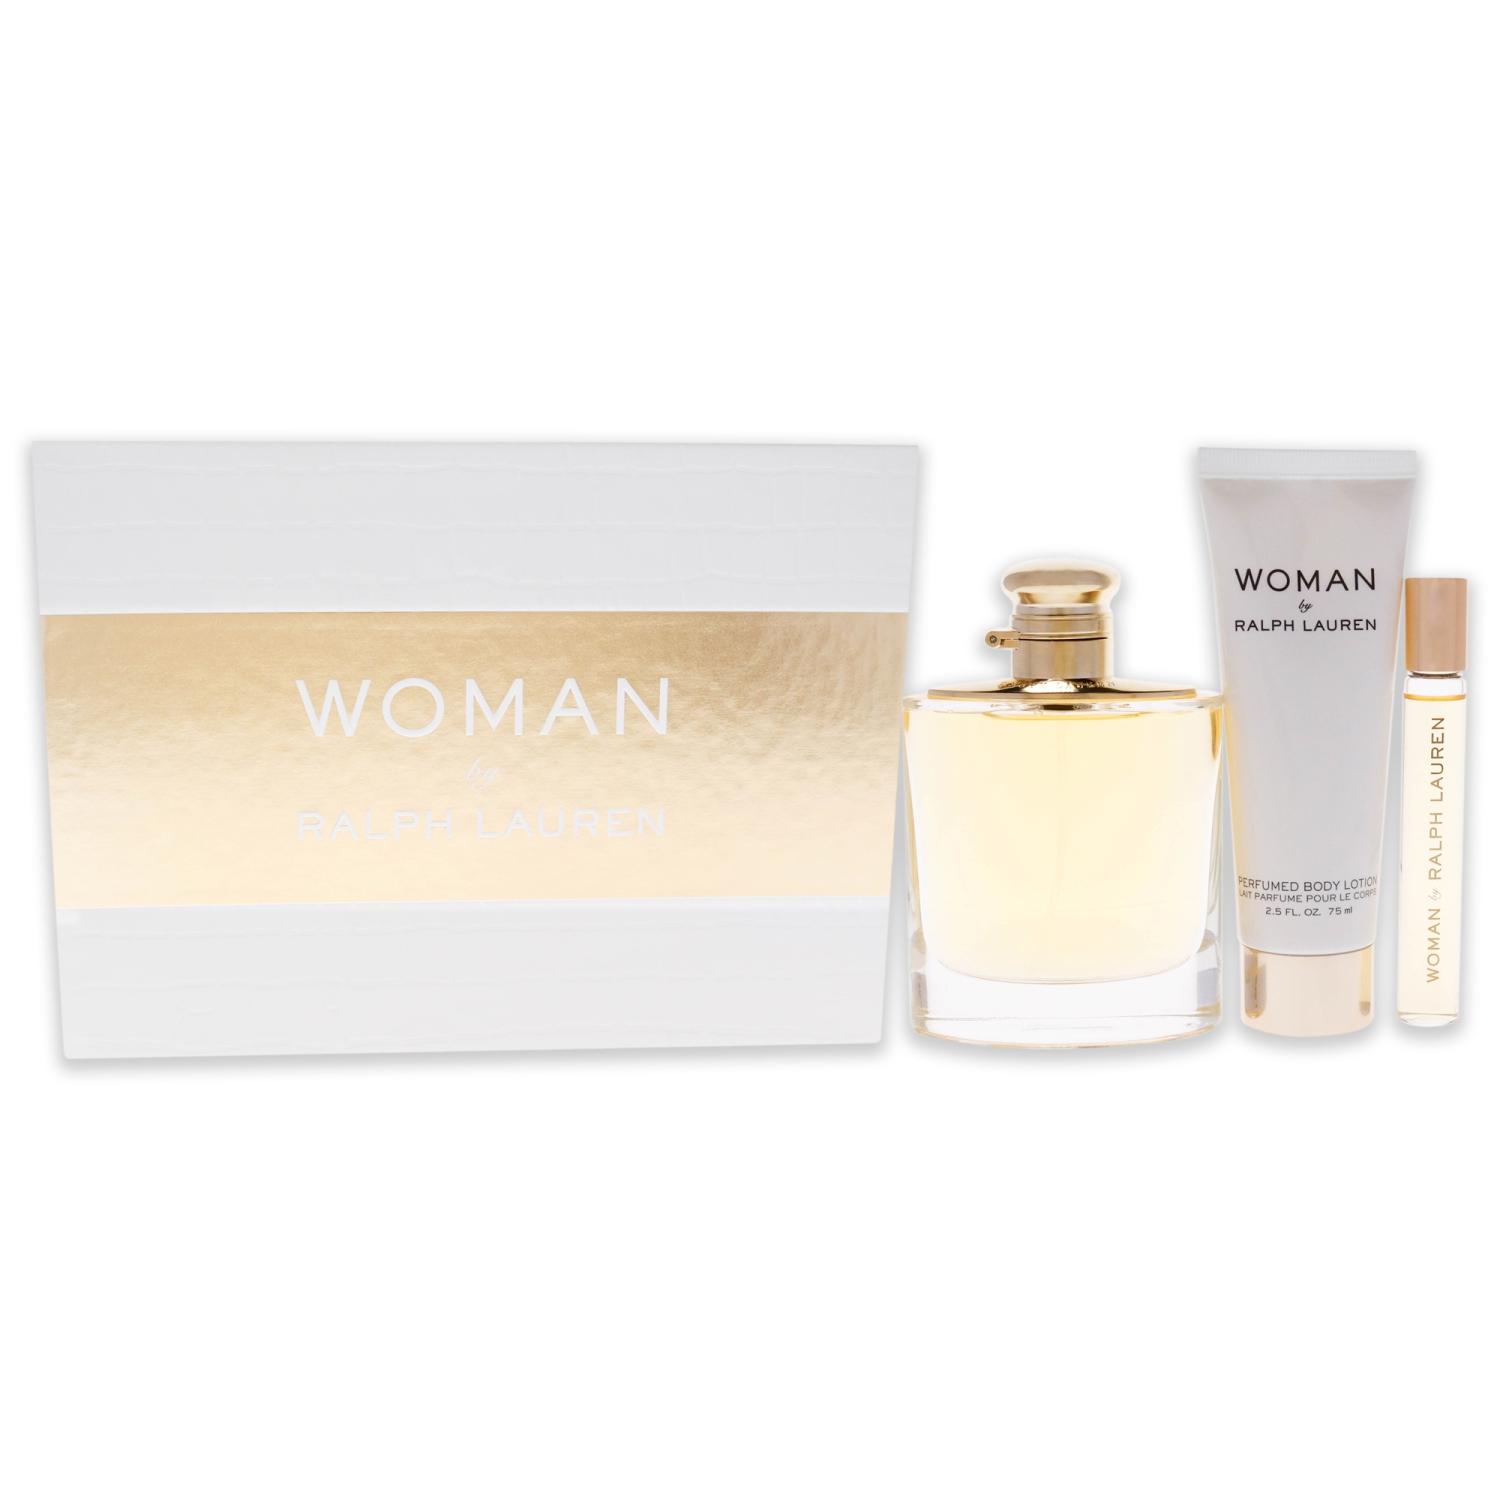 Woman by Ralph Lauren for Women - 3 Pc Gift Set 3.4oz EDP Spray, 0.34oz EDP Rollerball, 2.5oz Perfumed Body Lotion